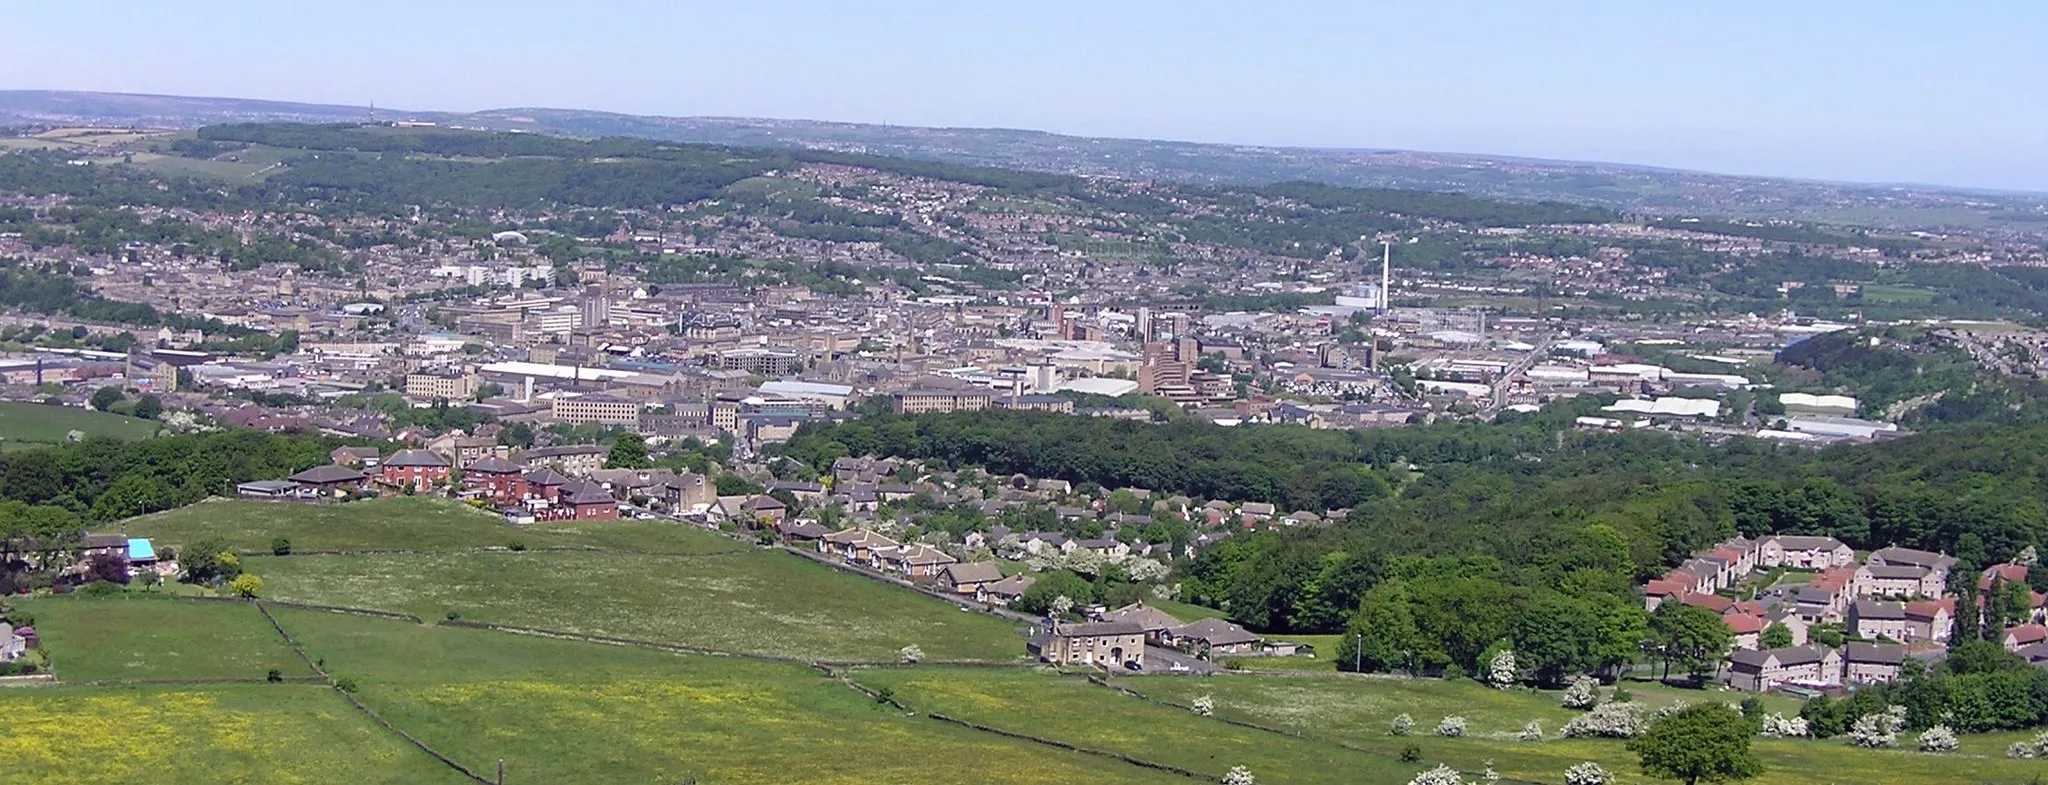 Image of Huddersfield